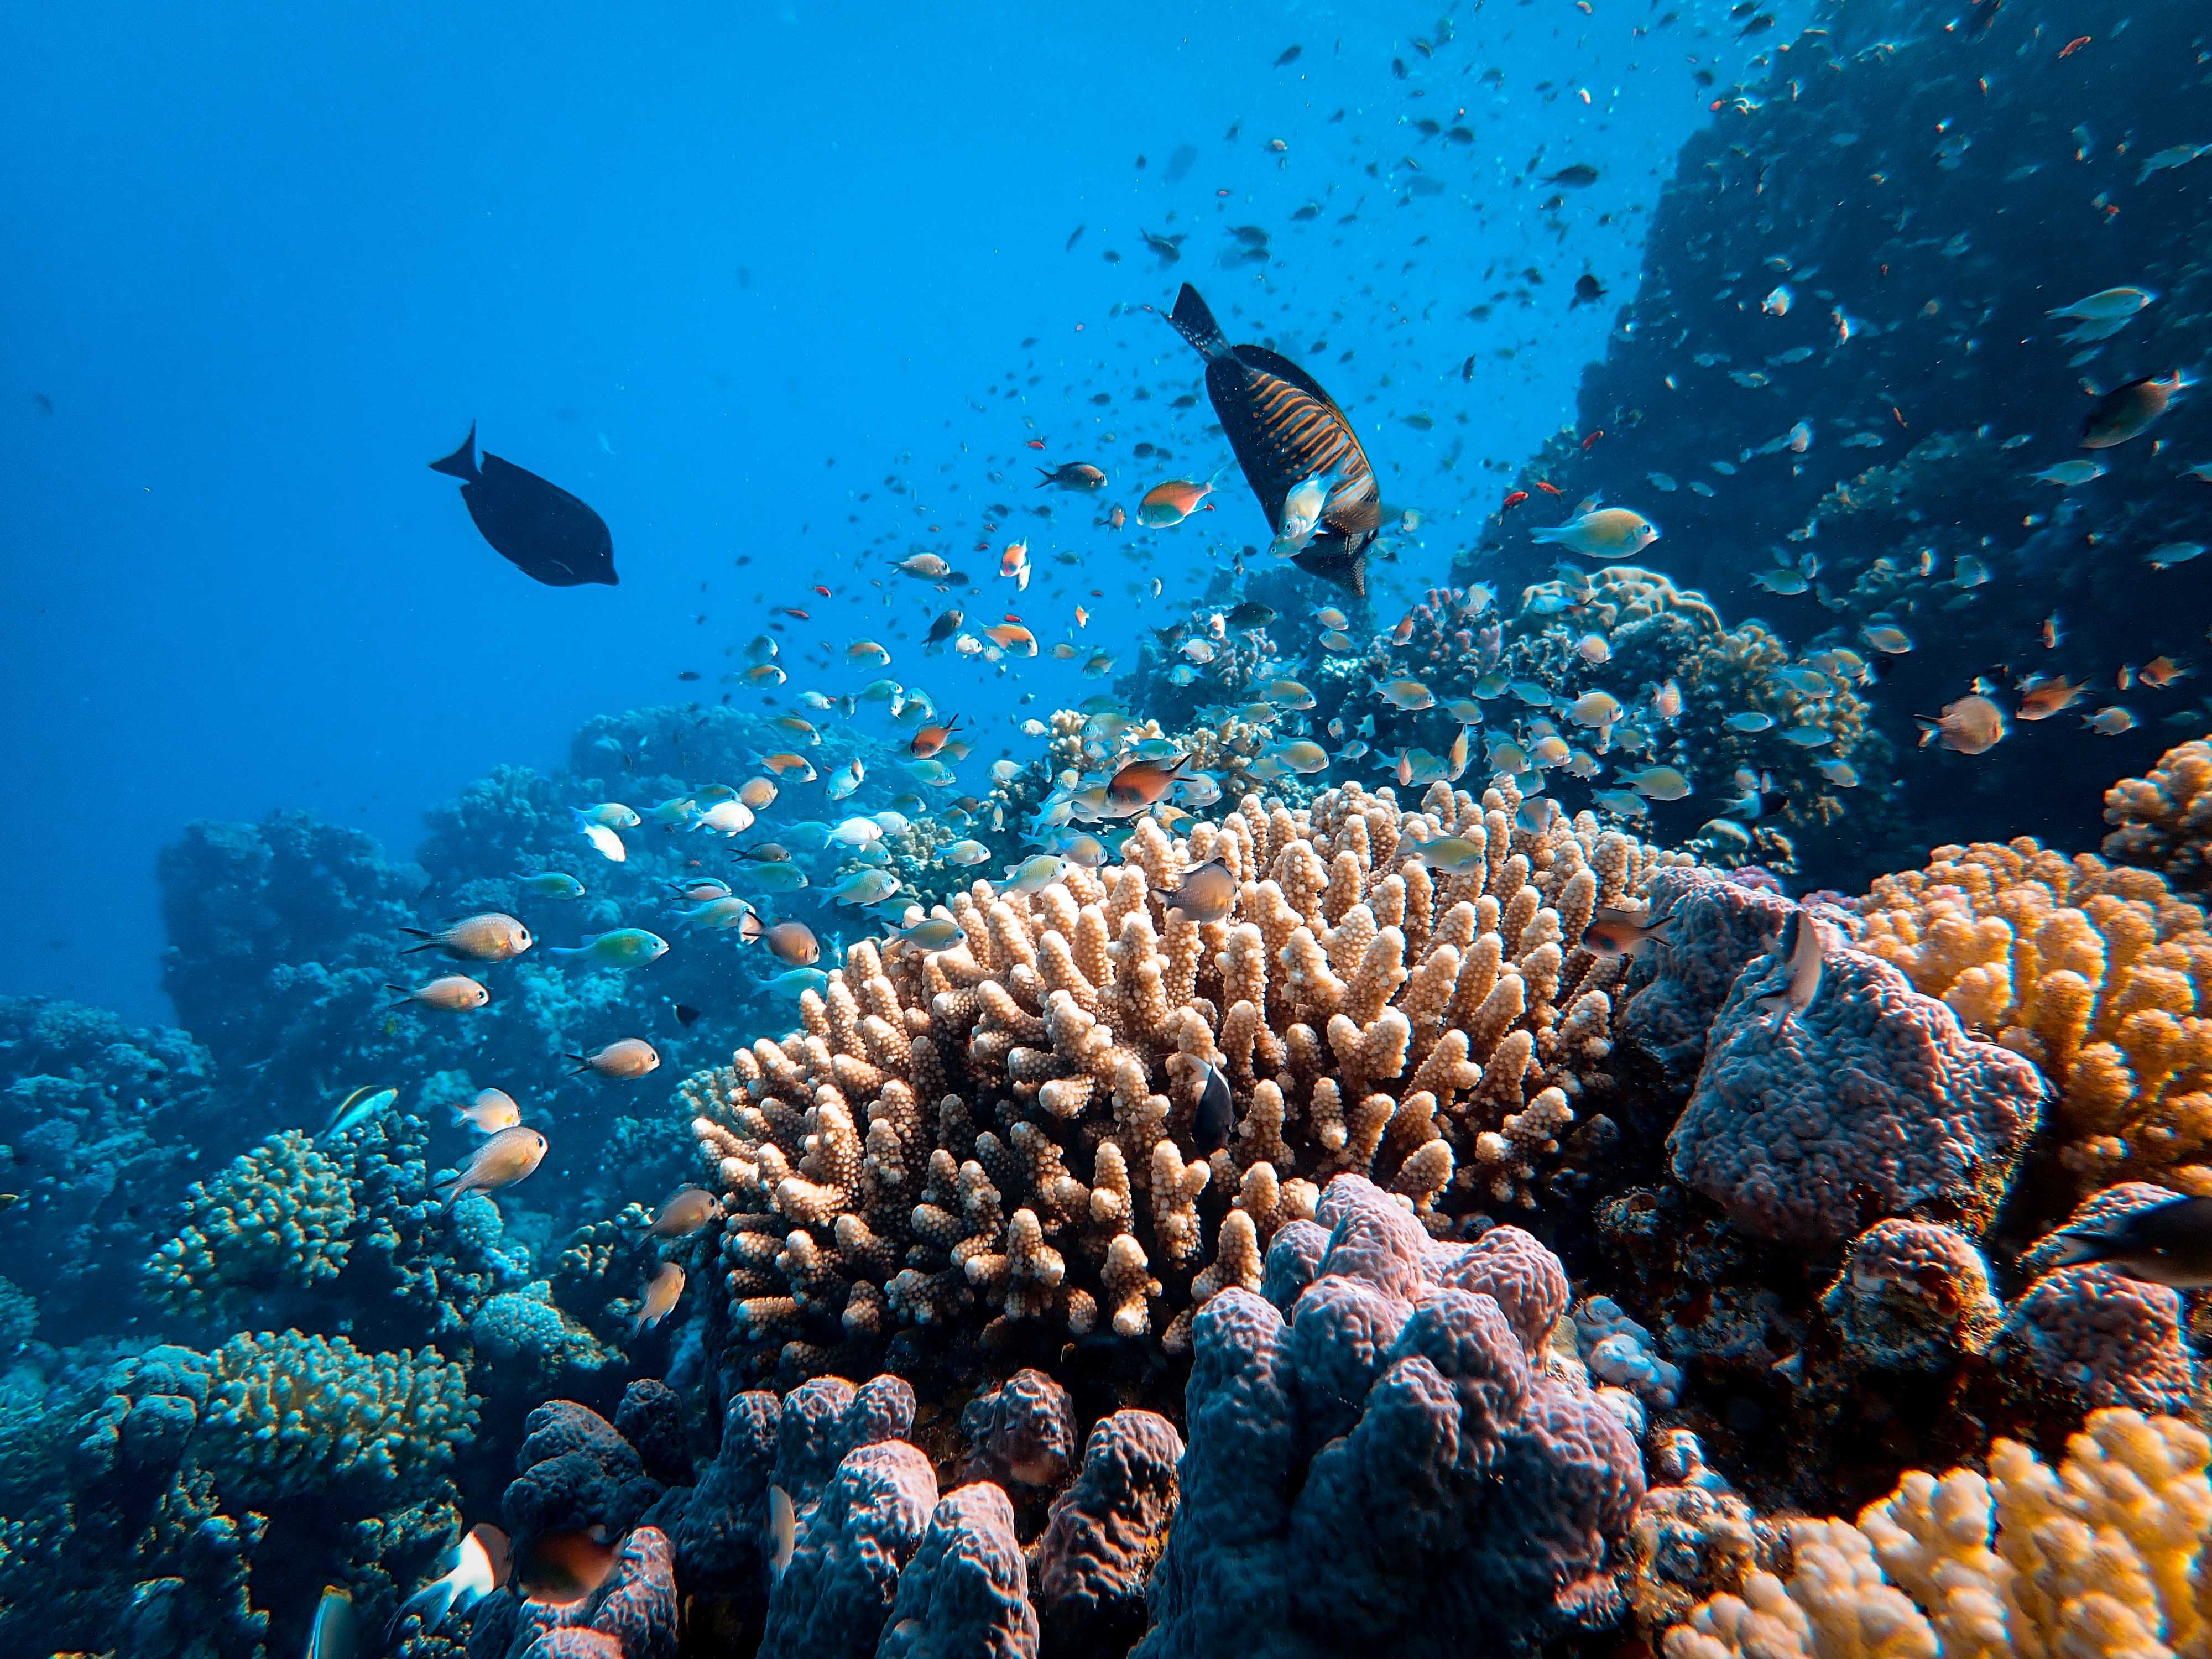 Ocean floor with coral reef and school of fish